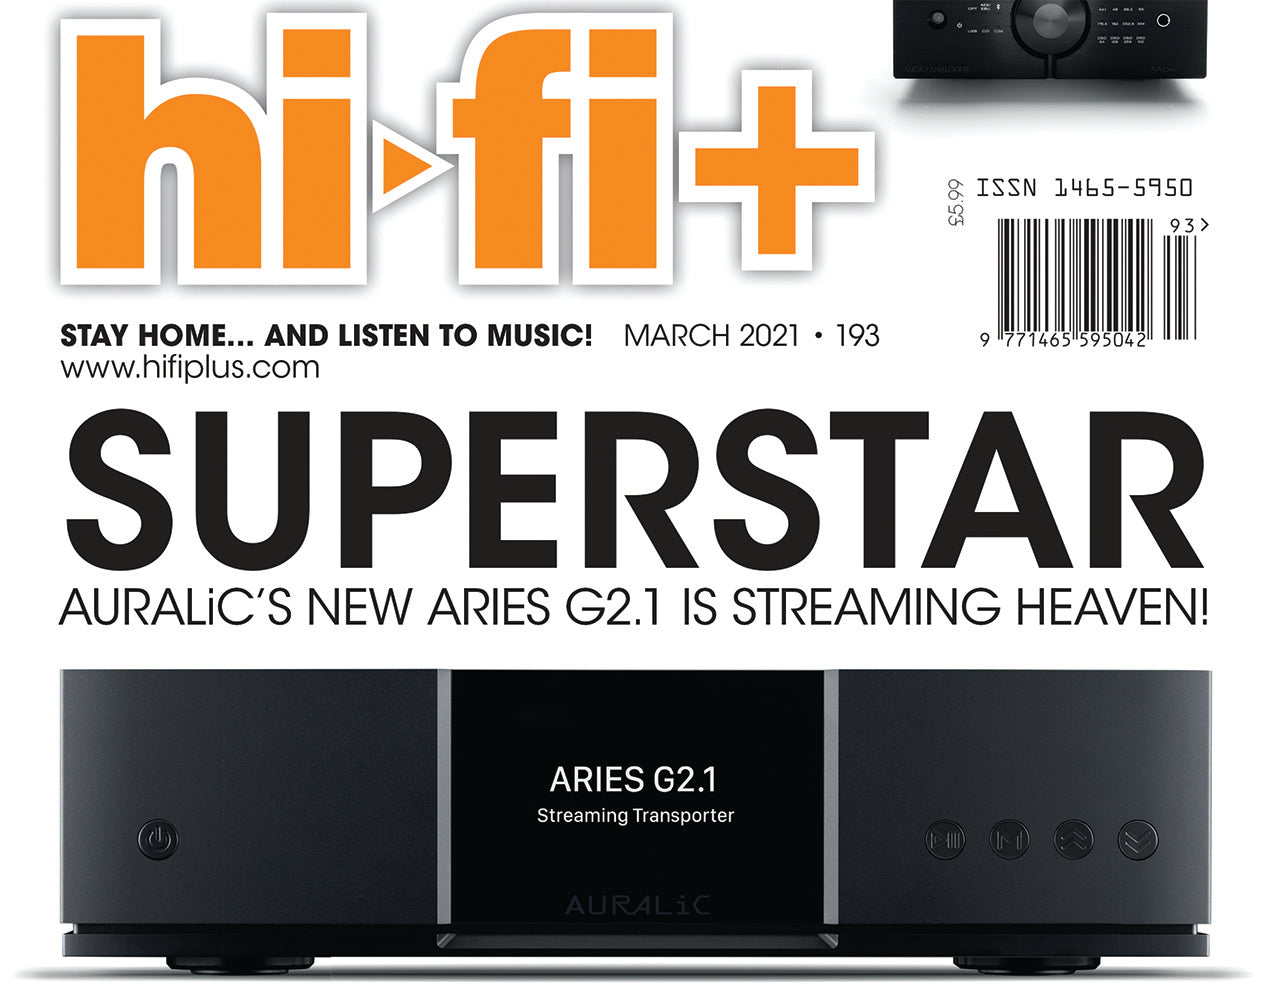 SUPERSTAR - AURALiC's NEW ARIES G2.1 IS STREAMING HEAVEN